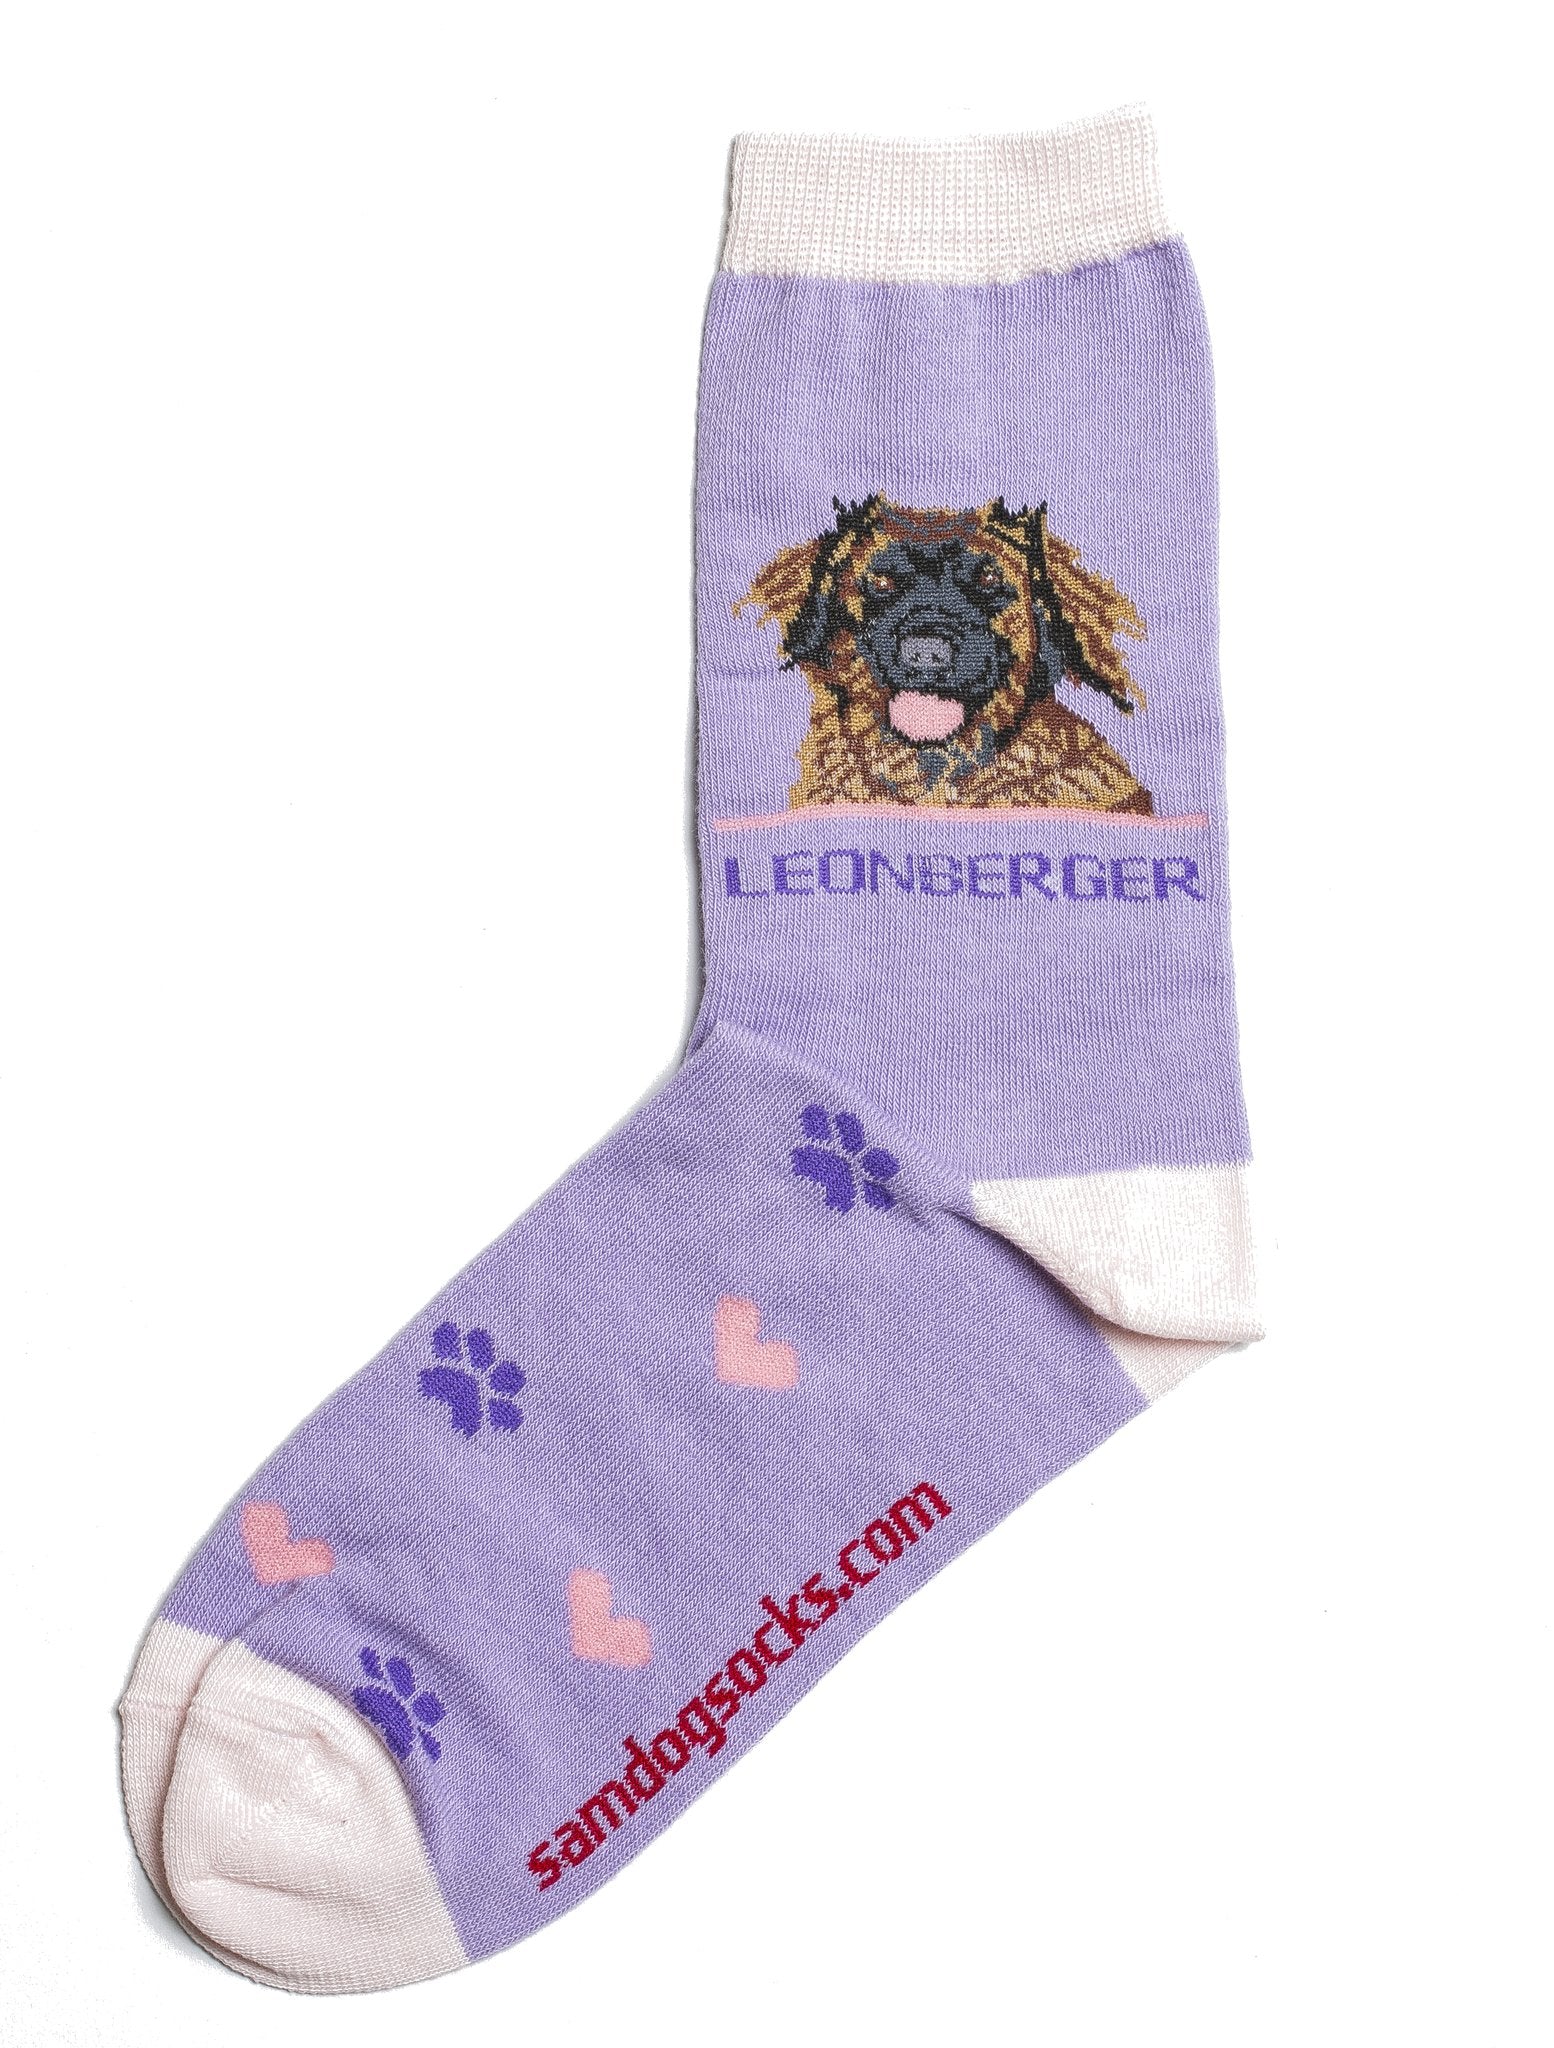 leonberger socks for women - purple & pink